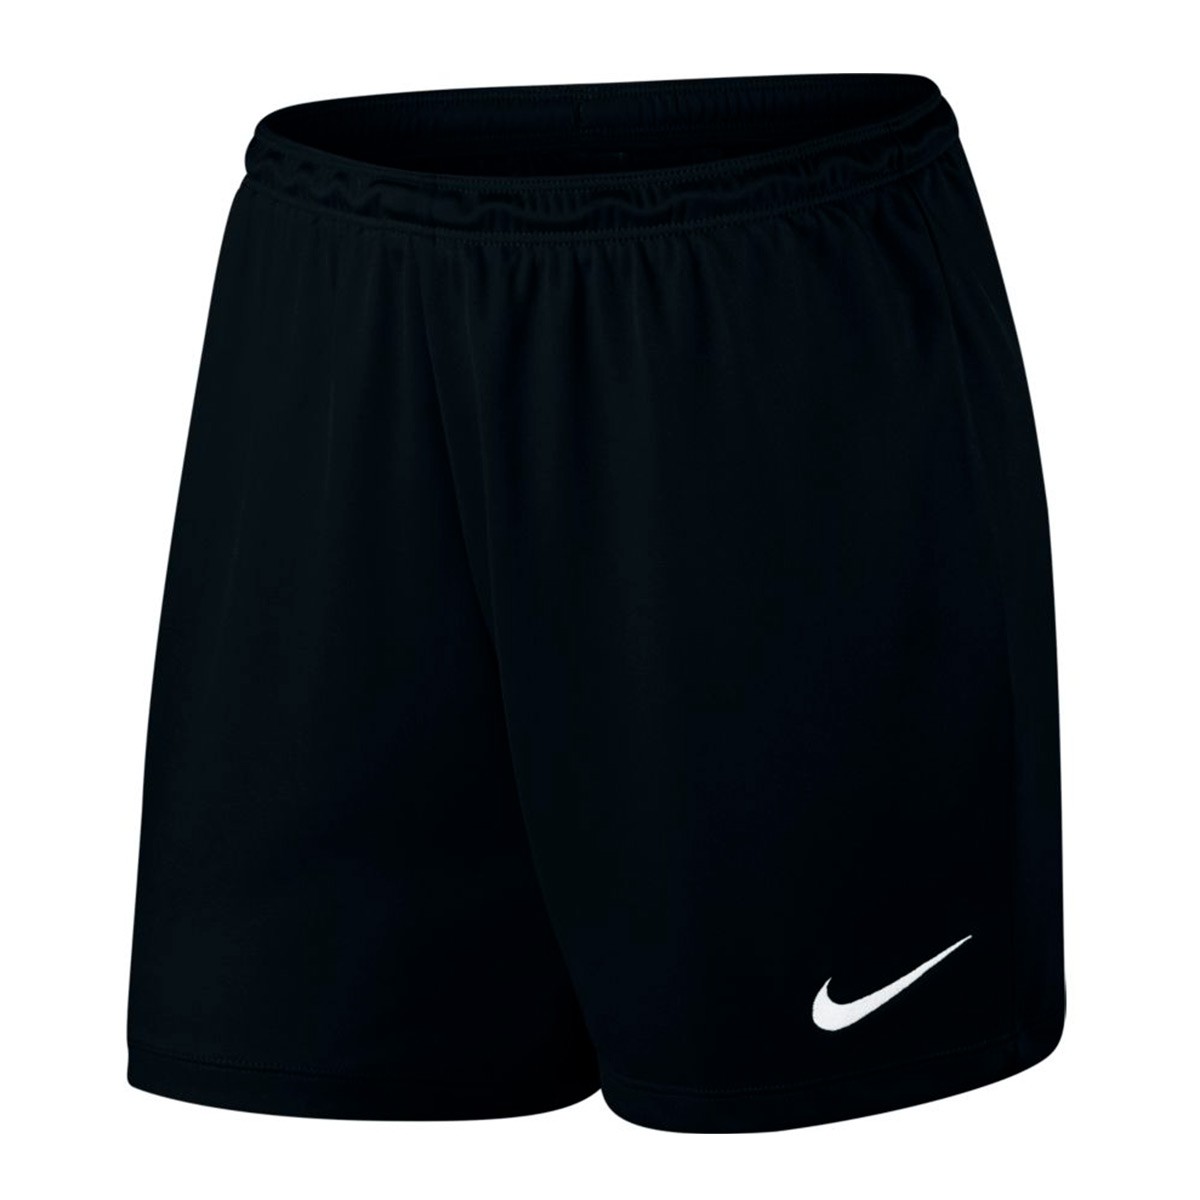 Shorts Nike Woman Park II Knit Black-White - Football store Fútbol Emotion